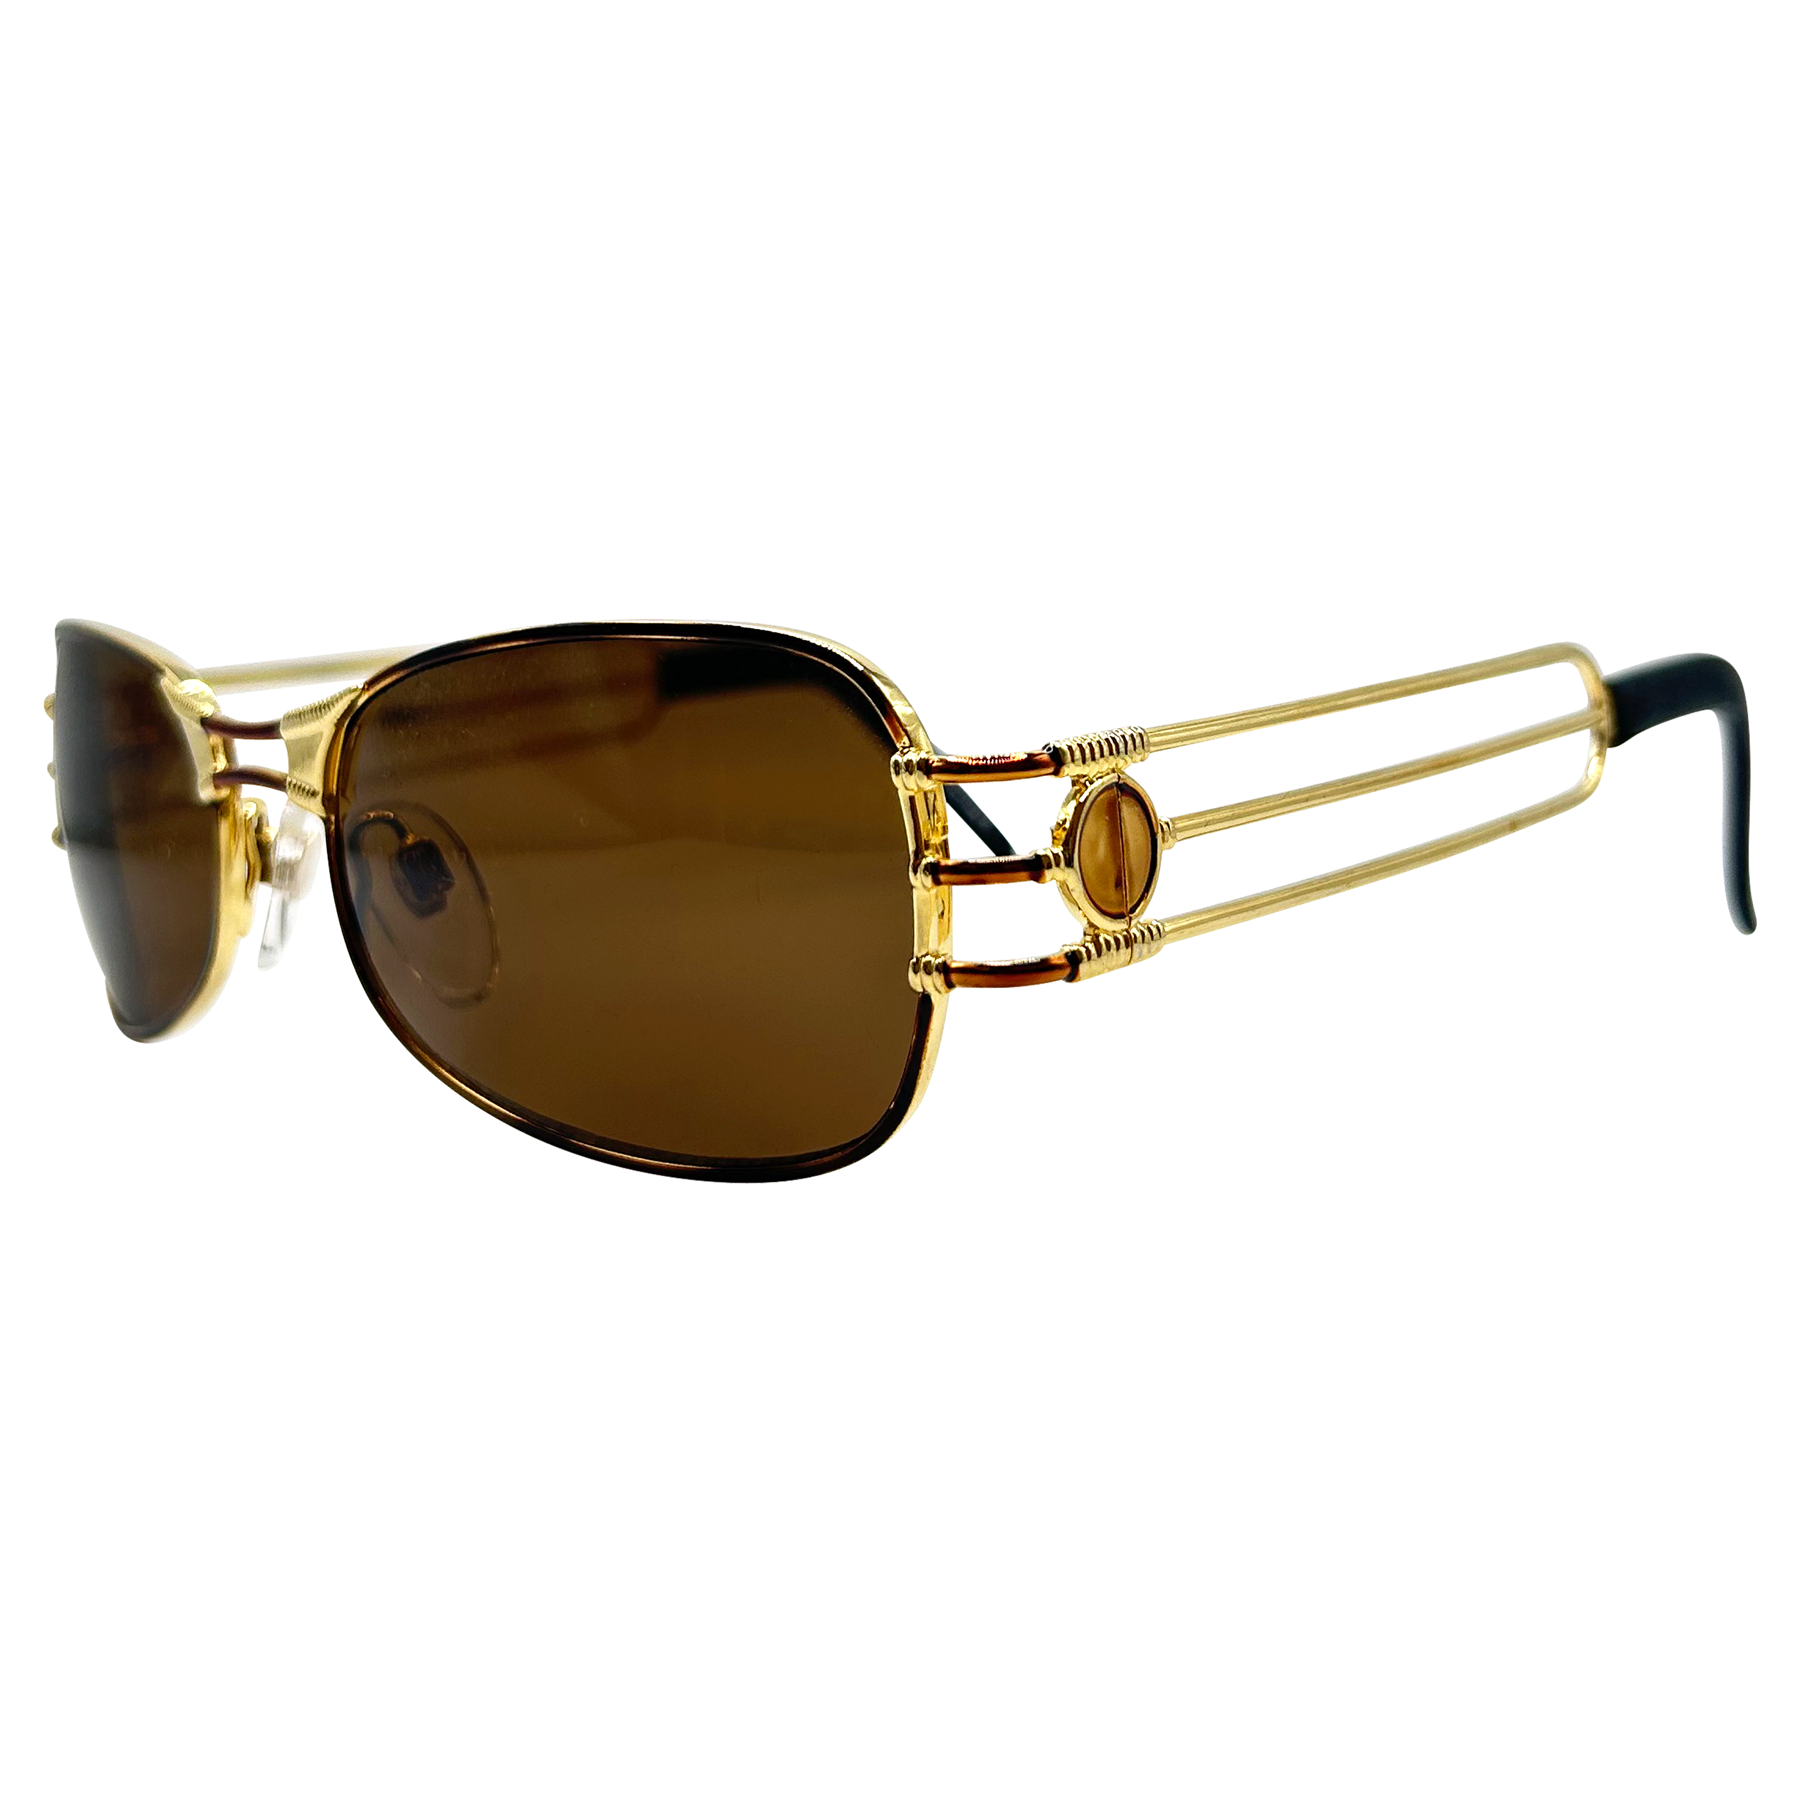 SEBASTIAN Square 90s Sunglasses